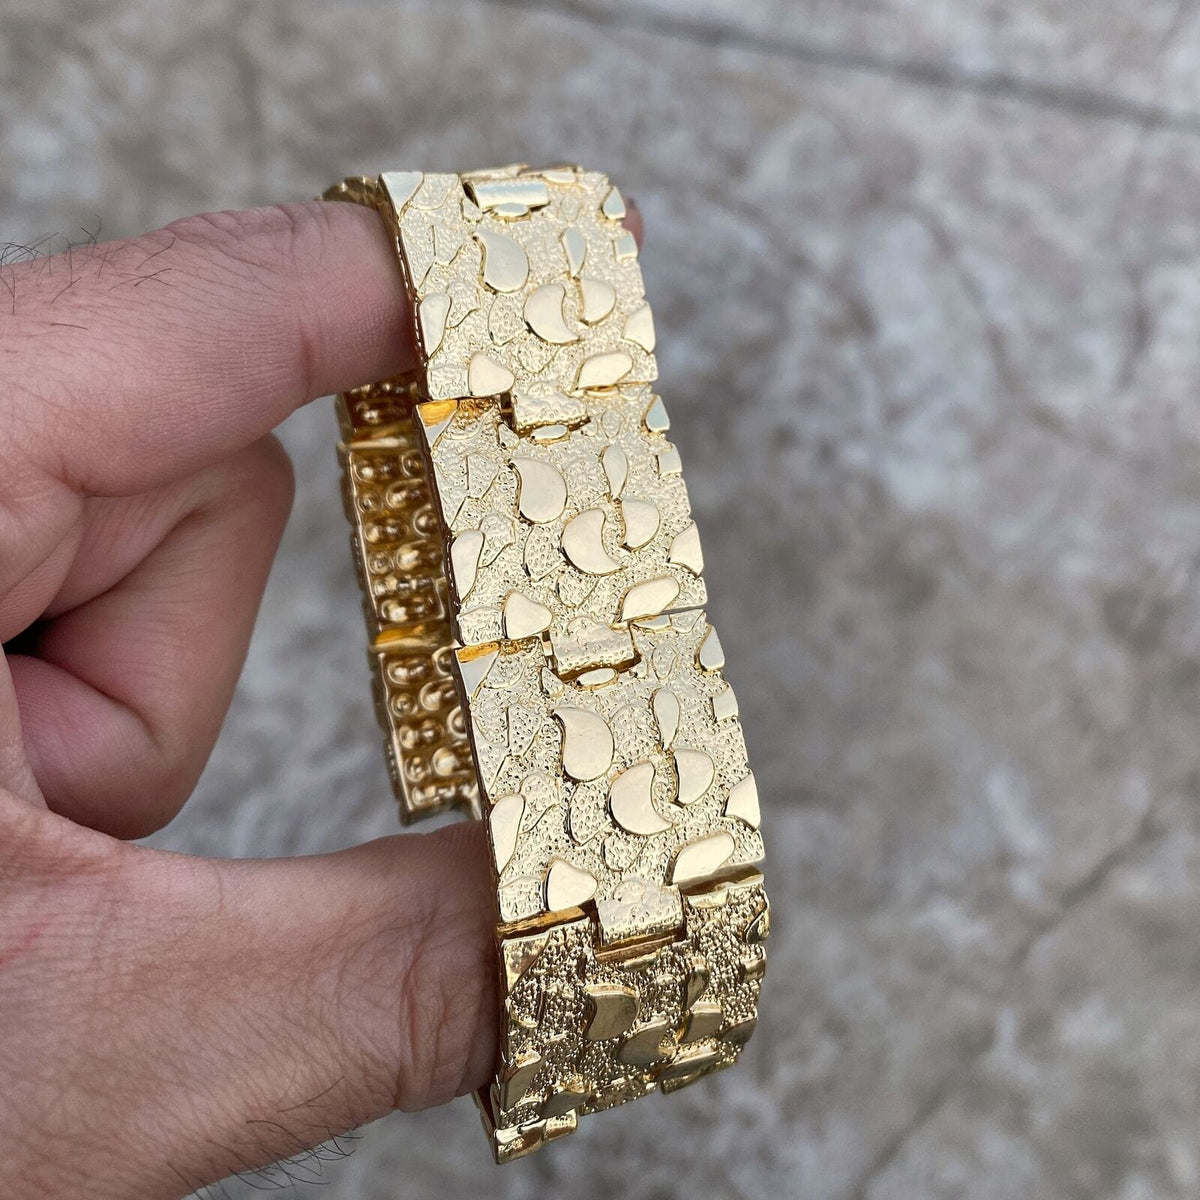 Men's Gold Bracelet, 8mm thick Gold Nugget Cuff Bracelet, Large